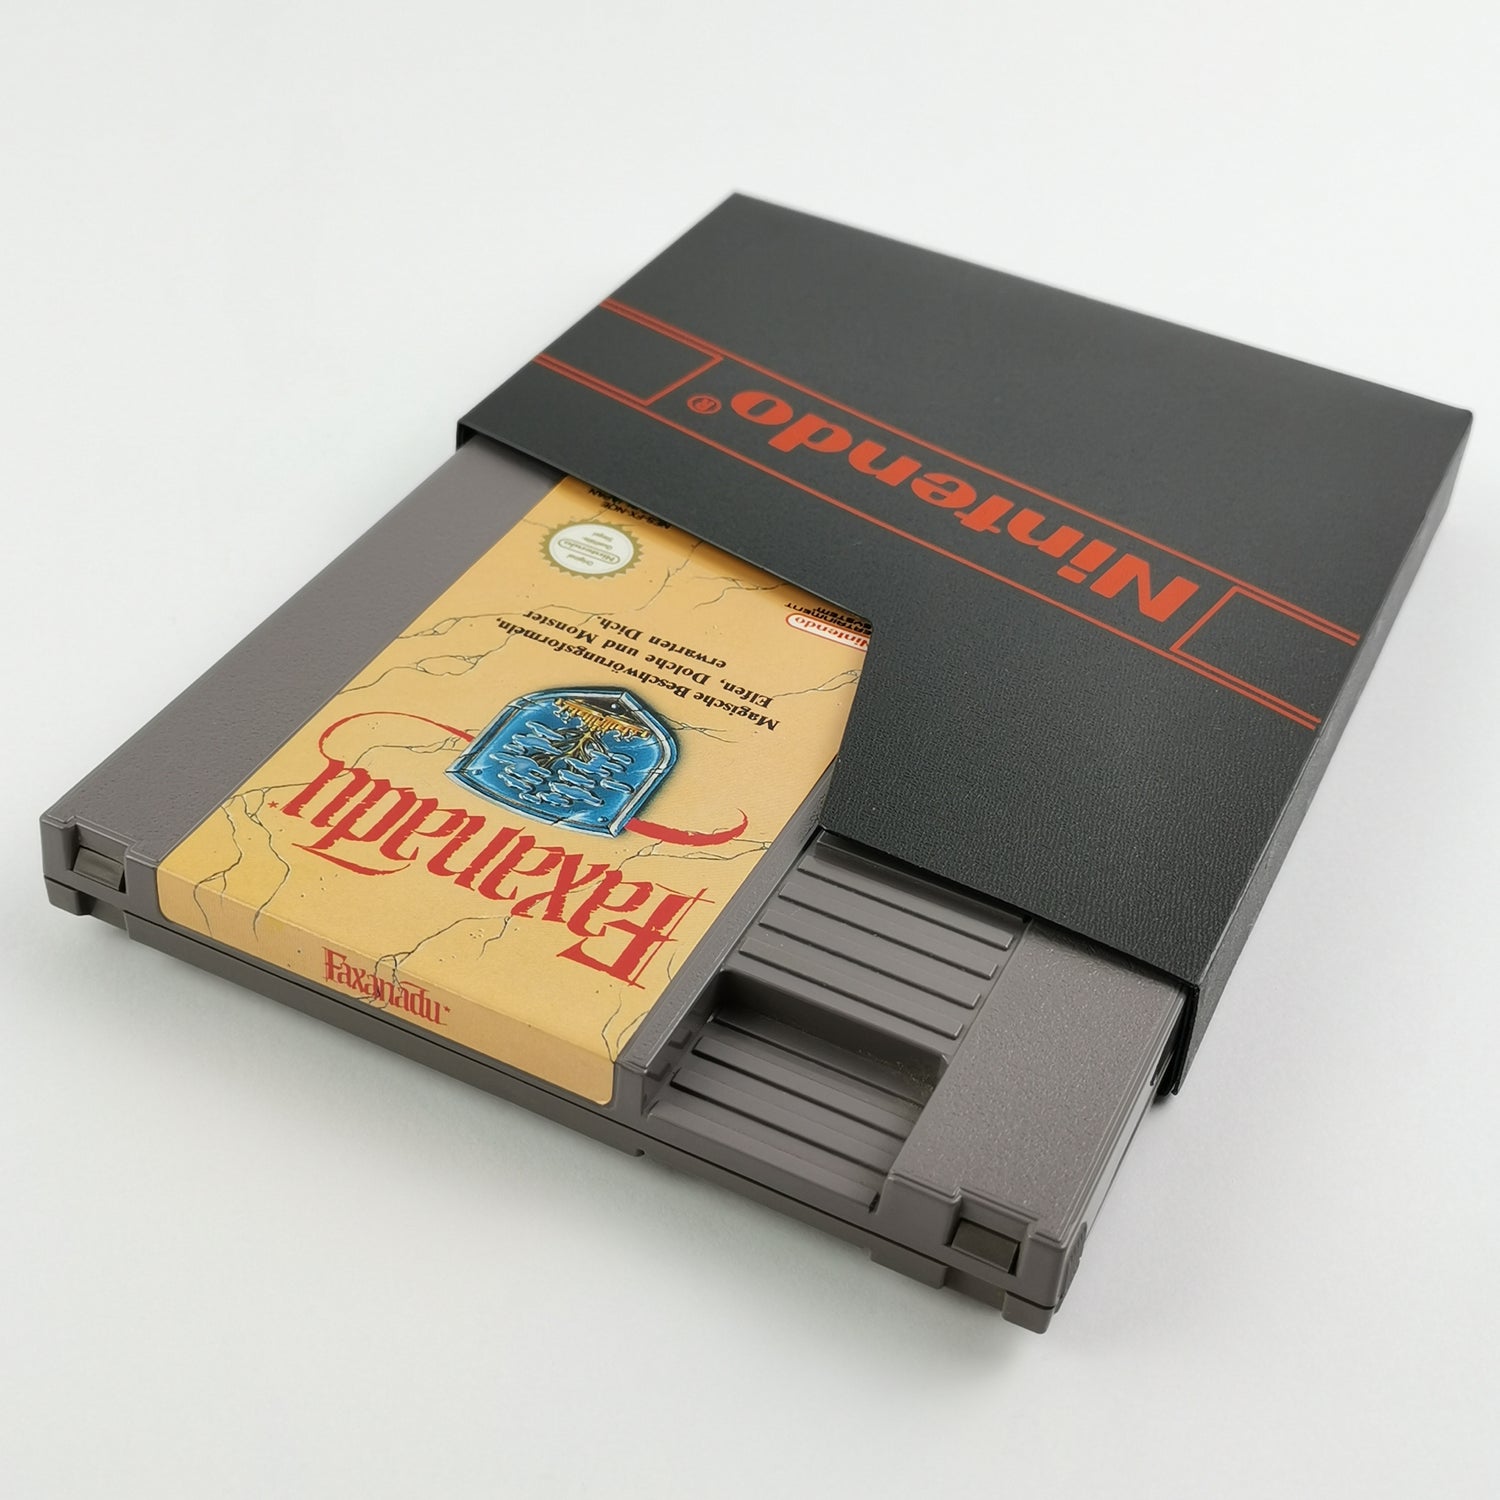 Nintendo NES game: Faxanadu - module / cartridge incl. slipcase | PAL NOE